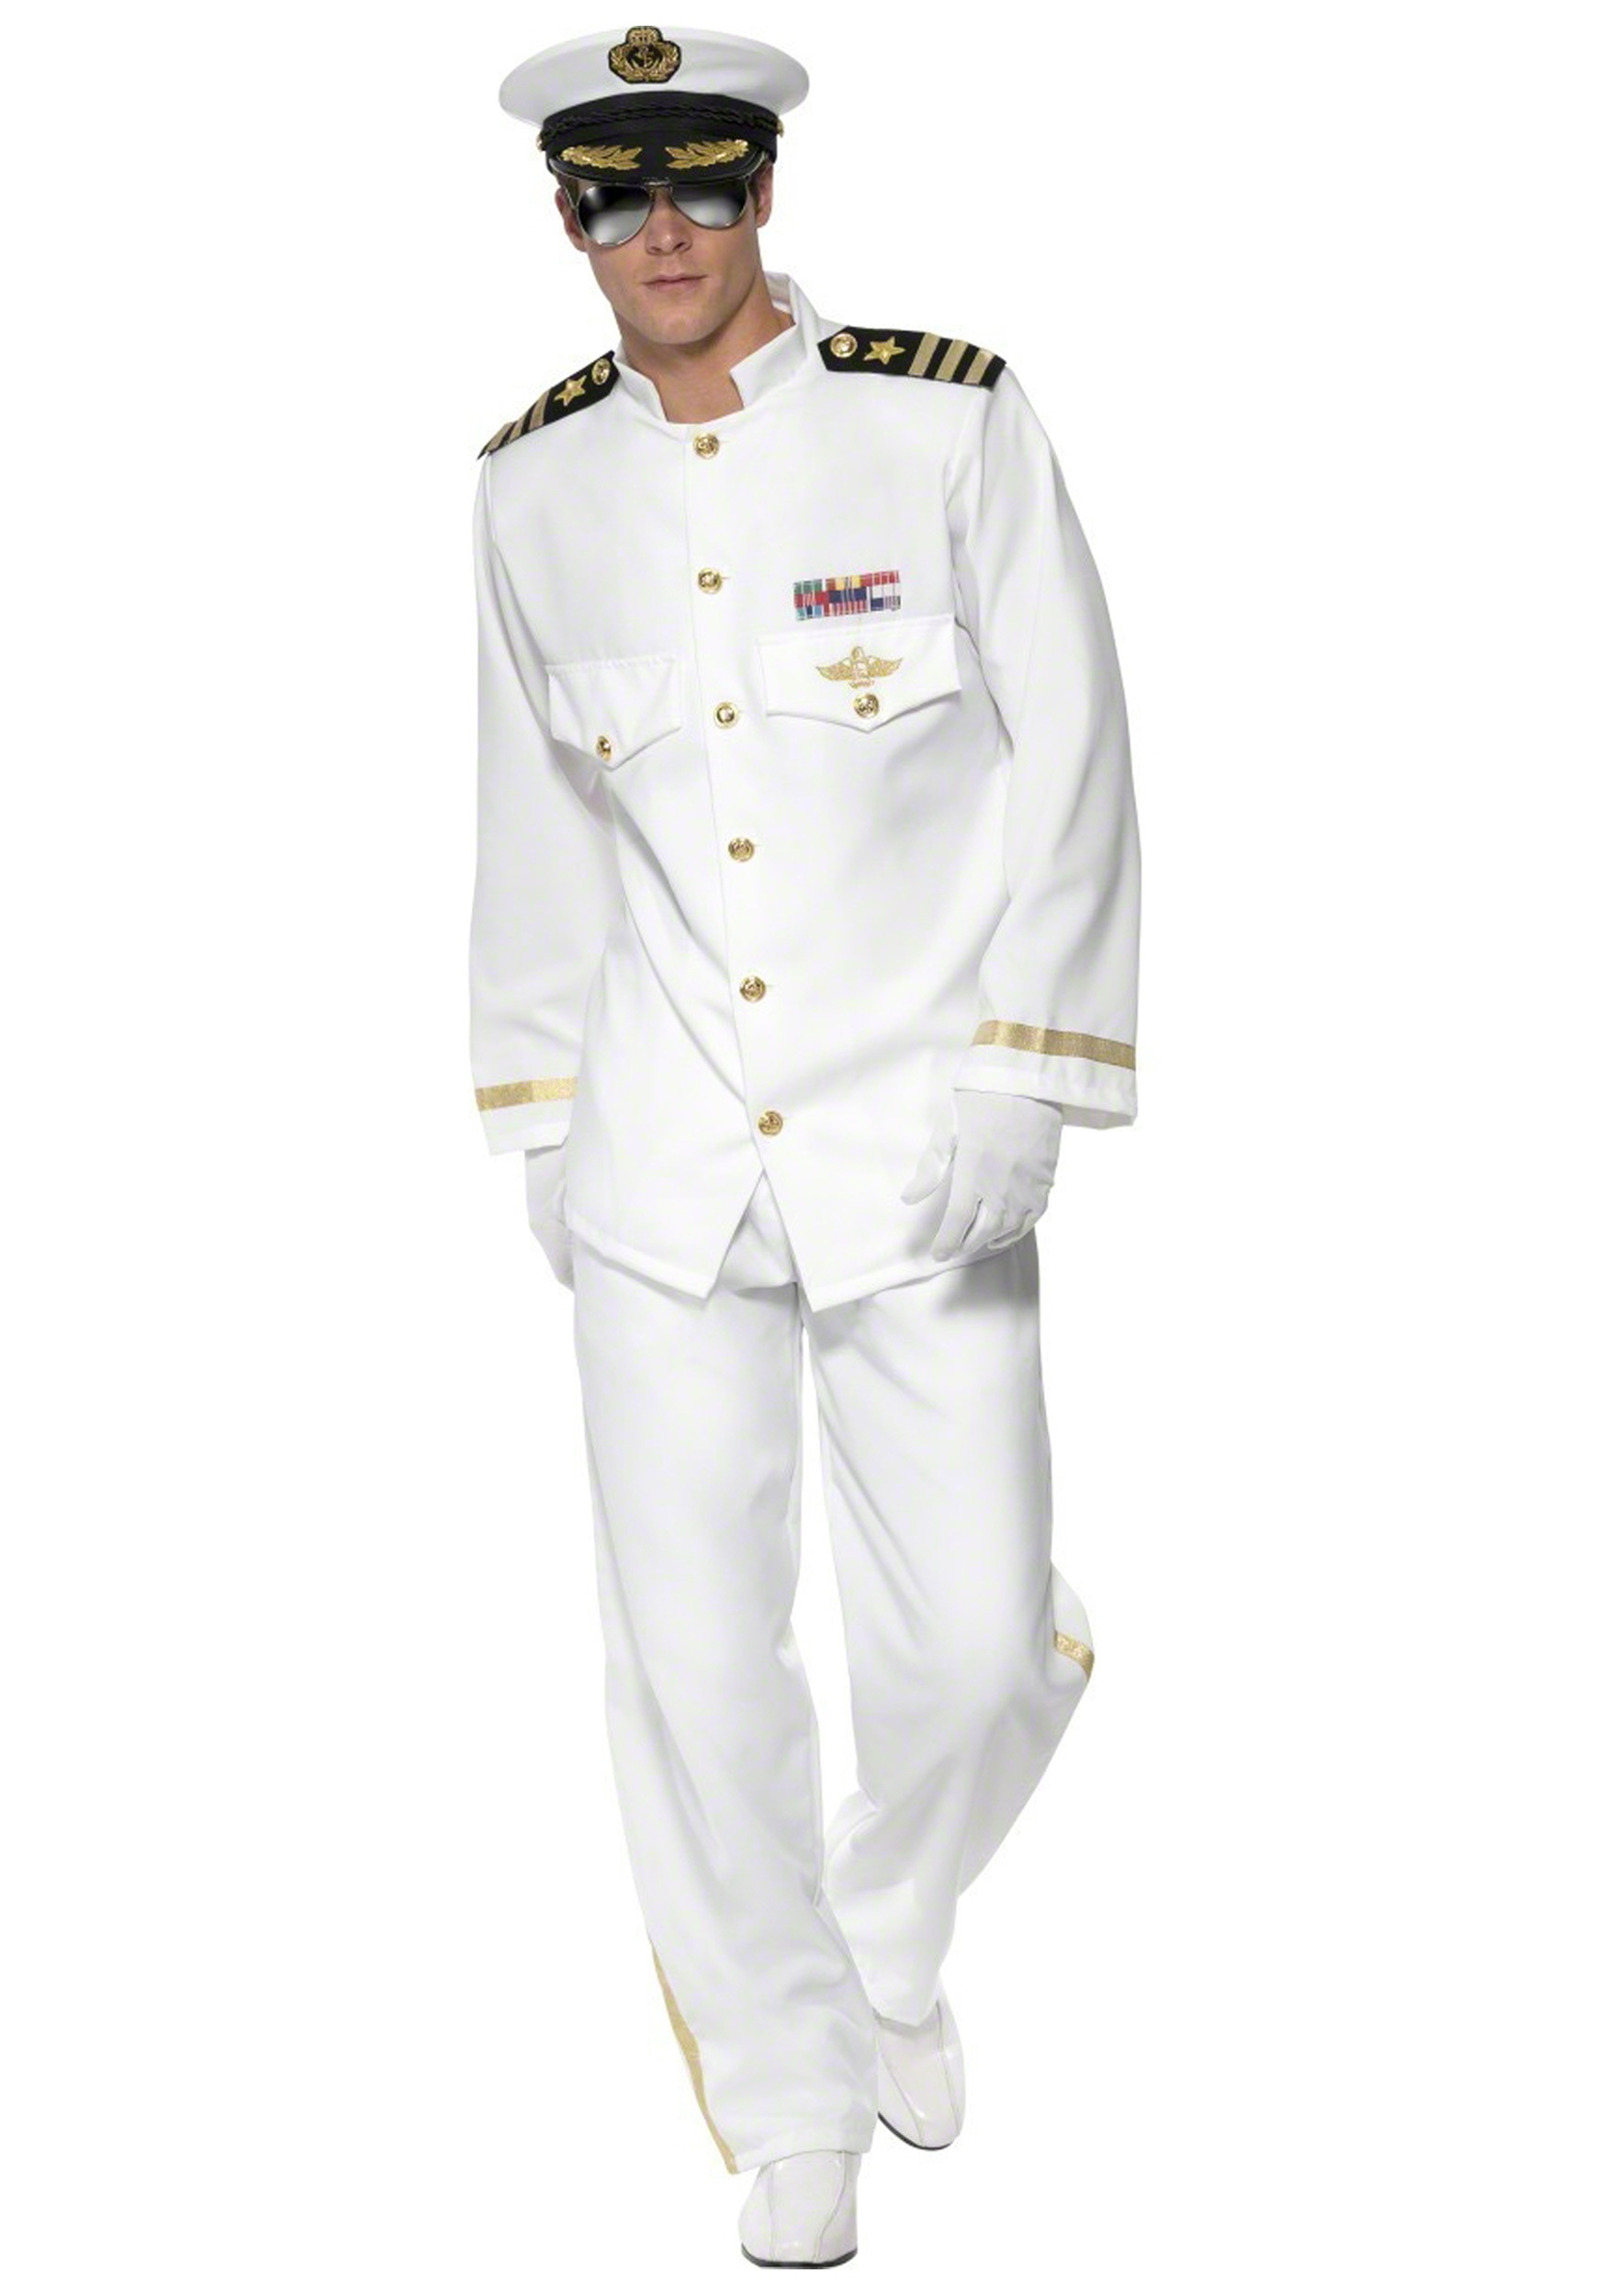 Photos - Fancy Dress Deluxe Smiffys  Ship Captain Costume for Men White SM33690 